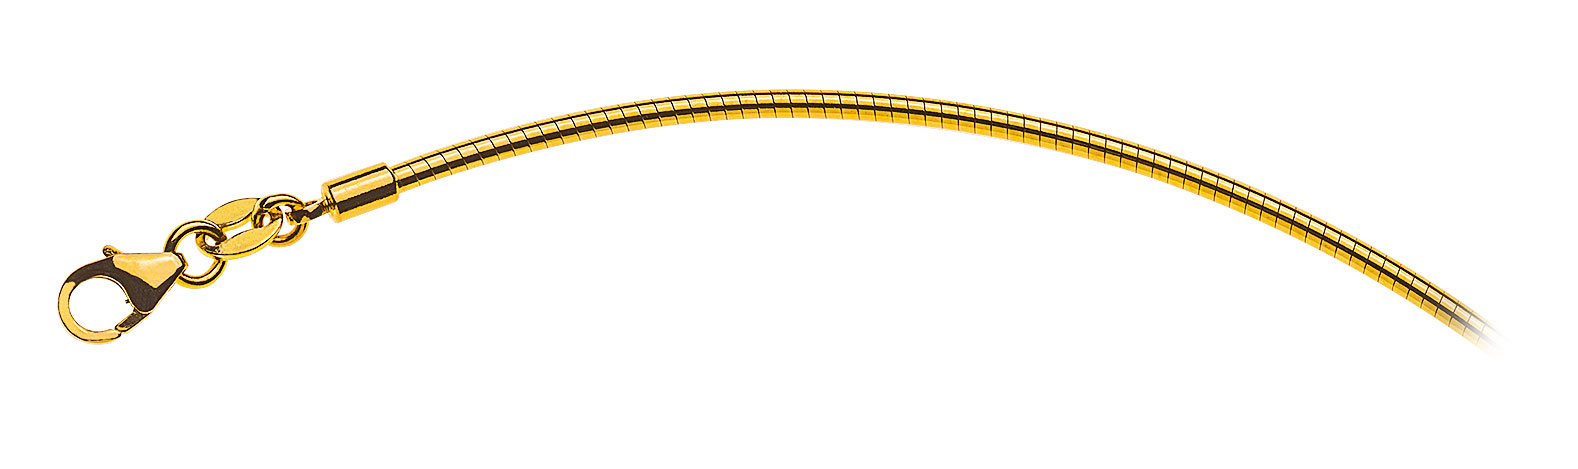 AURONOS Prestige Necklace Yellow Gold 18K Omega Chain 50cm 1.8mm